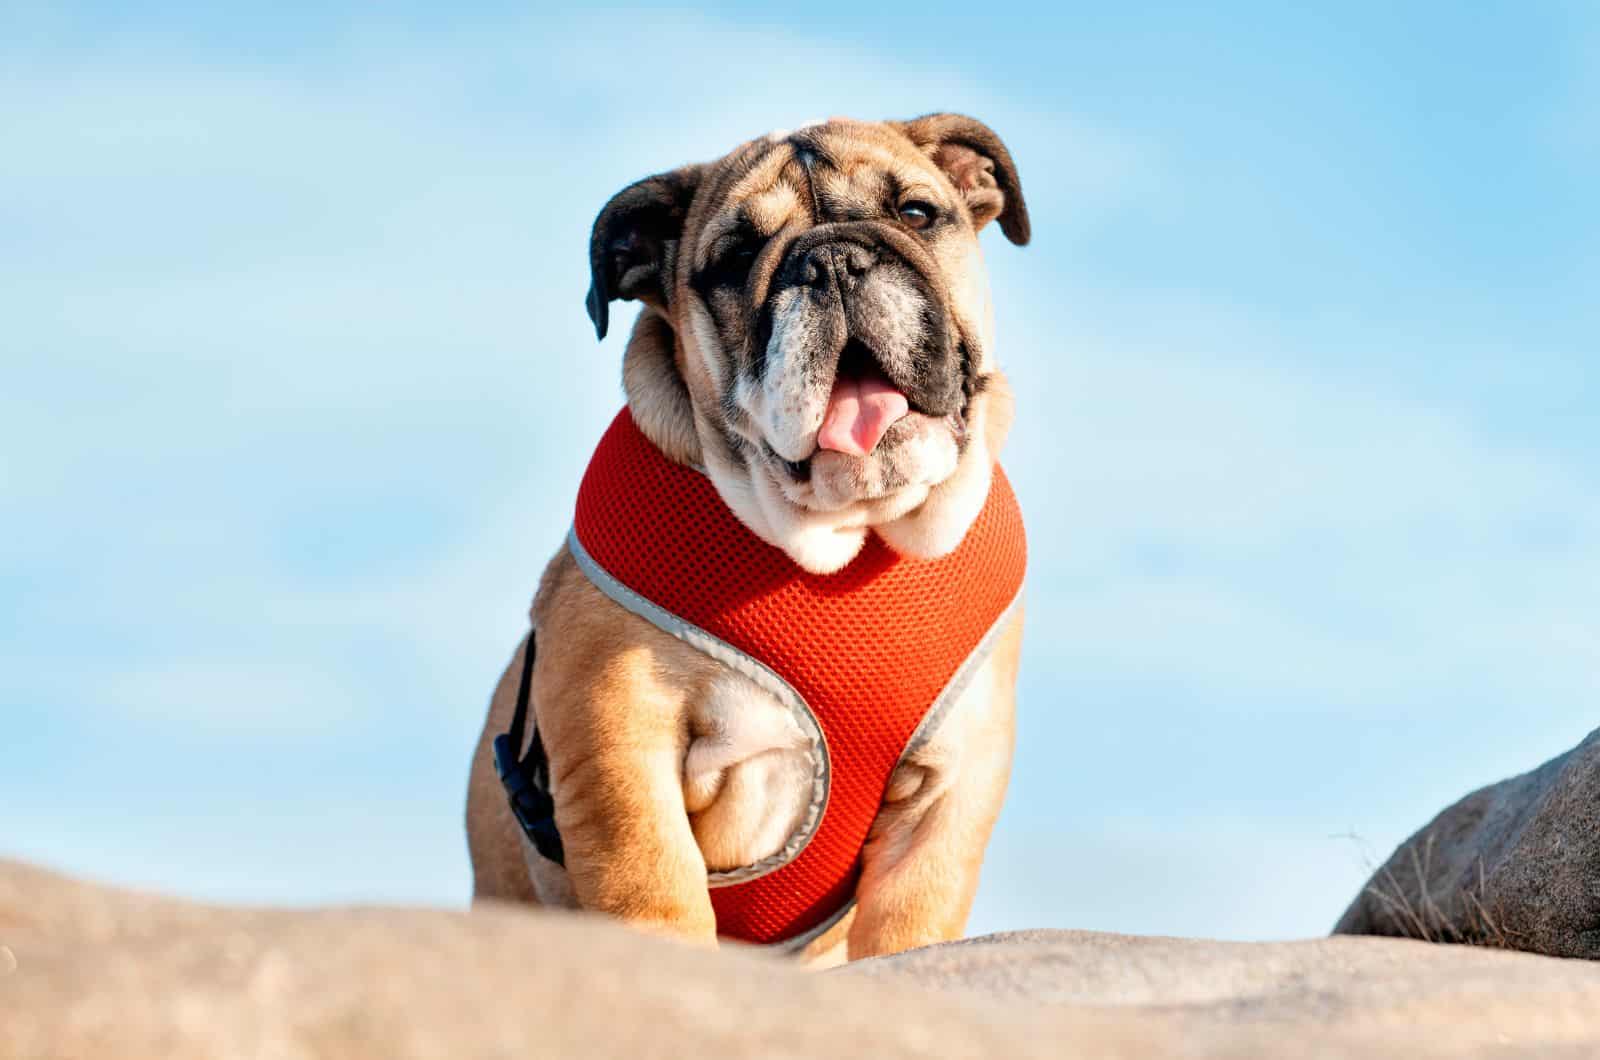 English Bulldog with Harness posing for camera